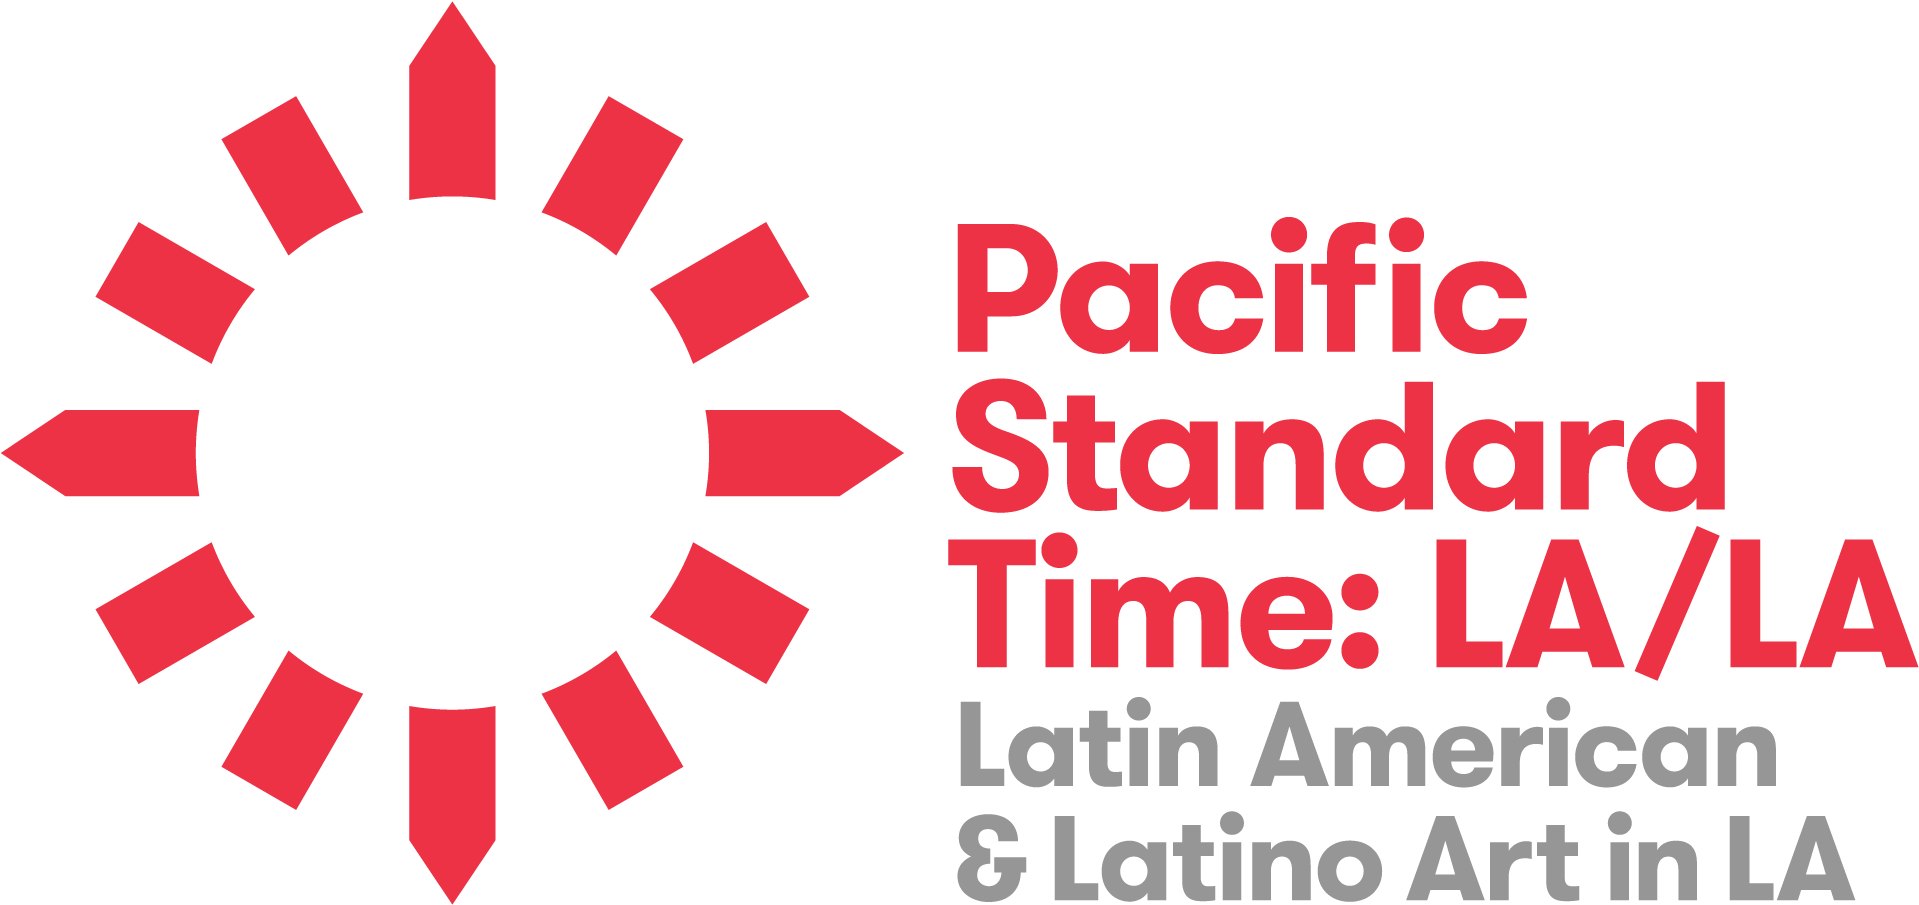 Pacific Standard Time - Getty Pacific Standard Time La La (1920x1080), Png Download